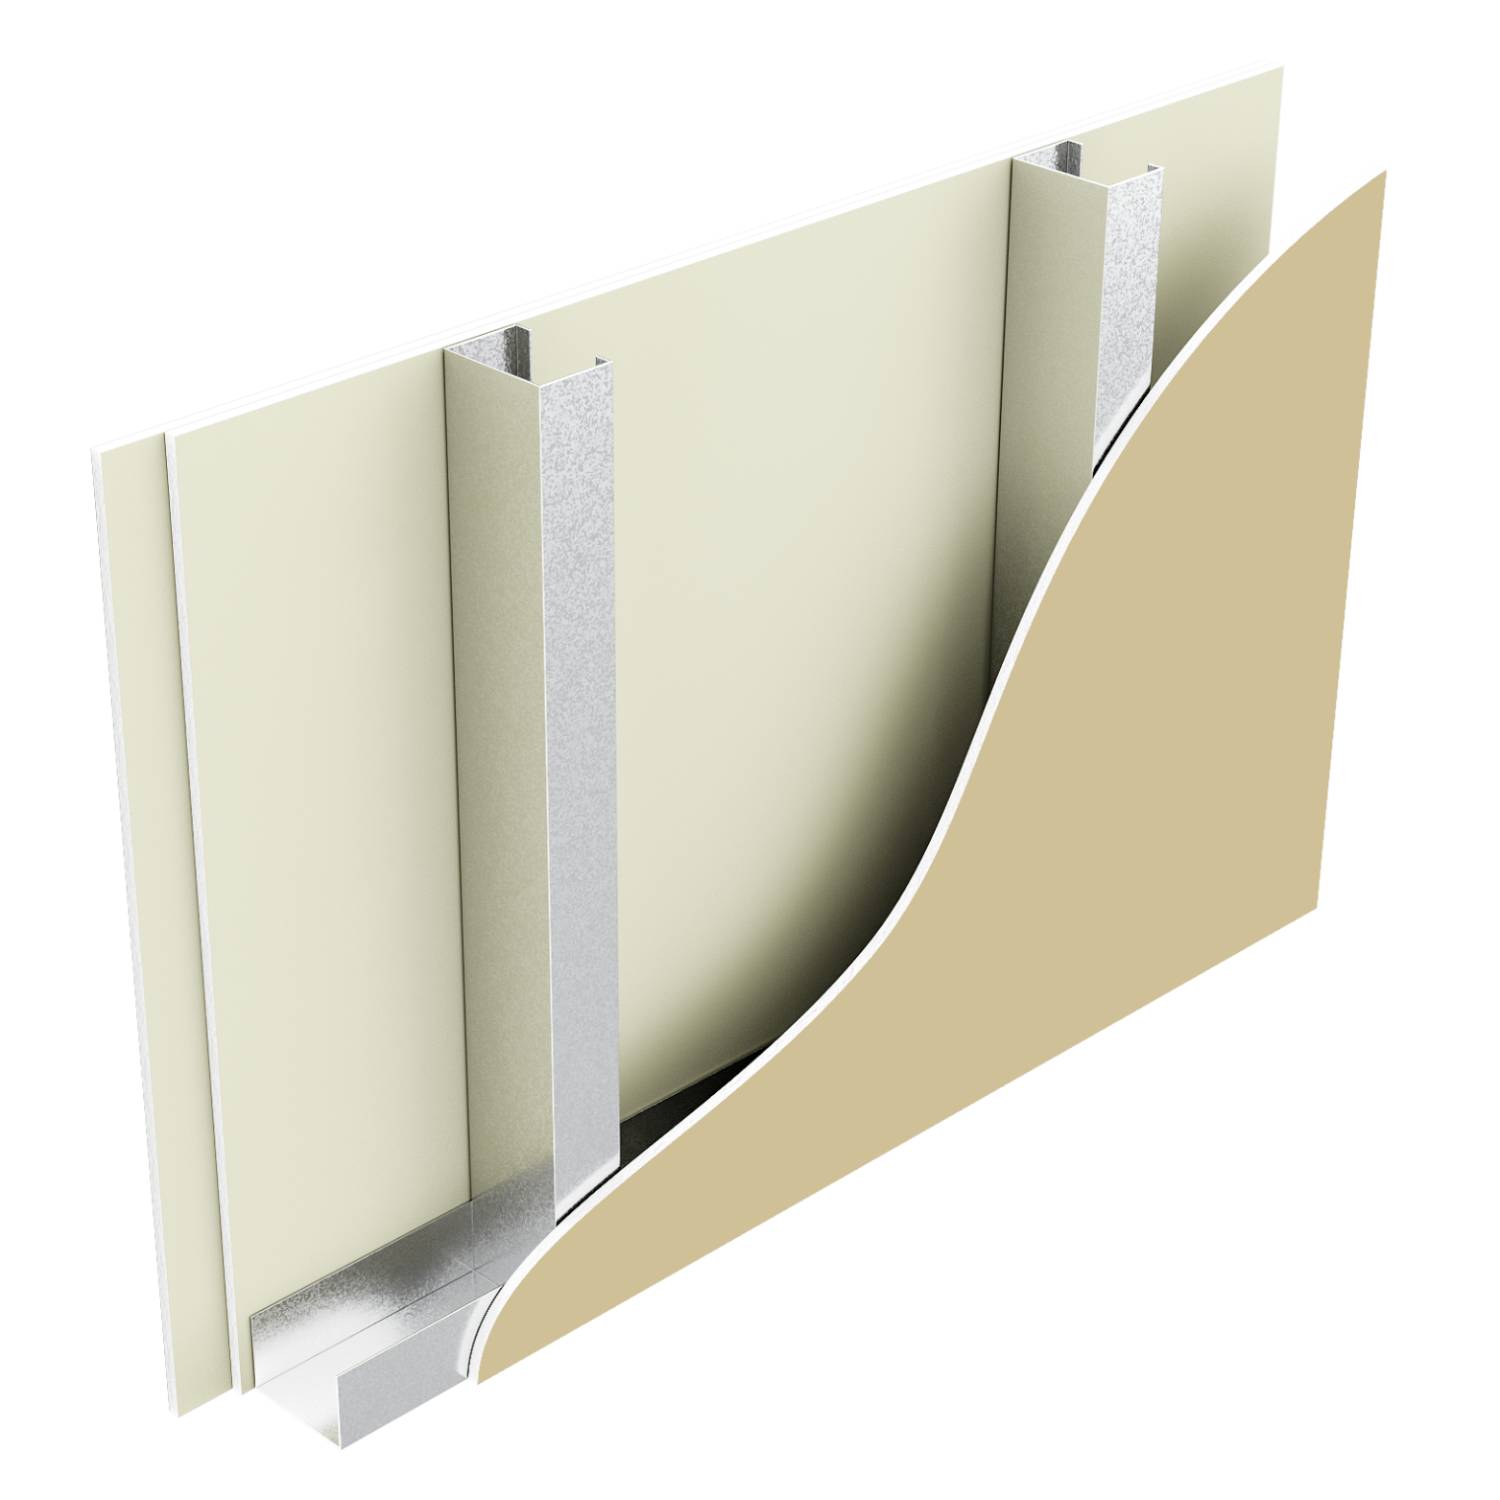 Metsec SFS Infill Wall with Y-Wall Sheathing Board, Siniat GTEC Internal Boards, Fire performance 120 min (non boundary)